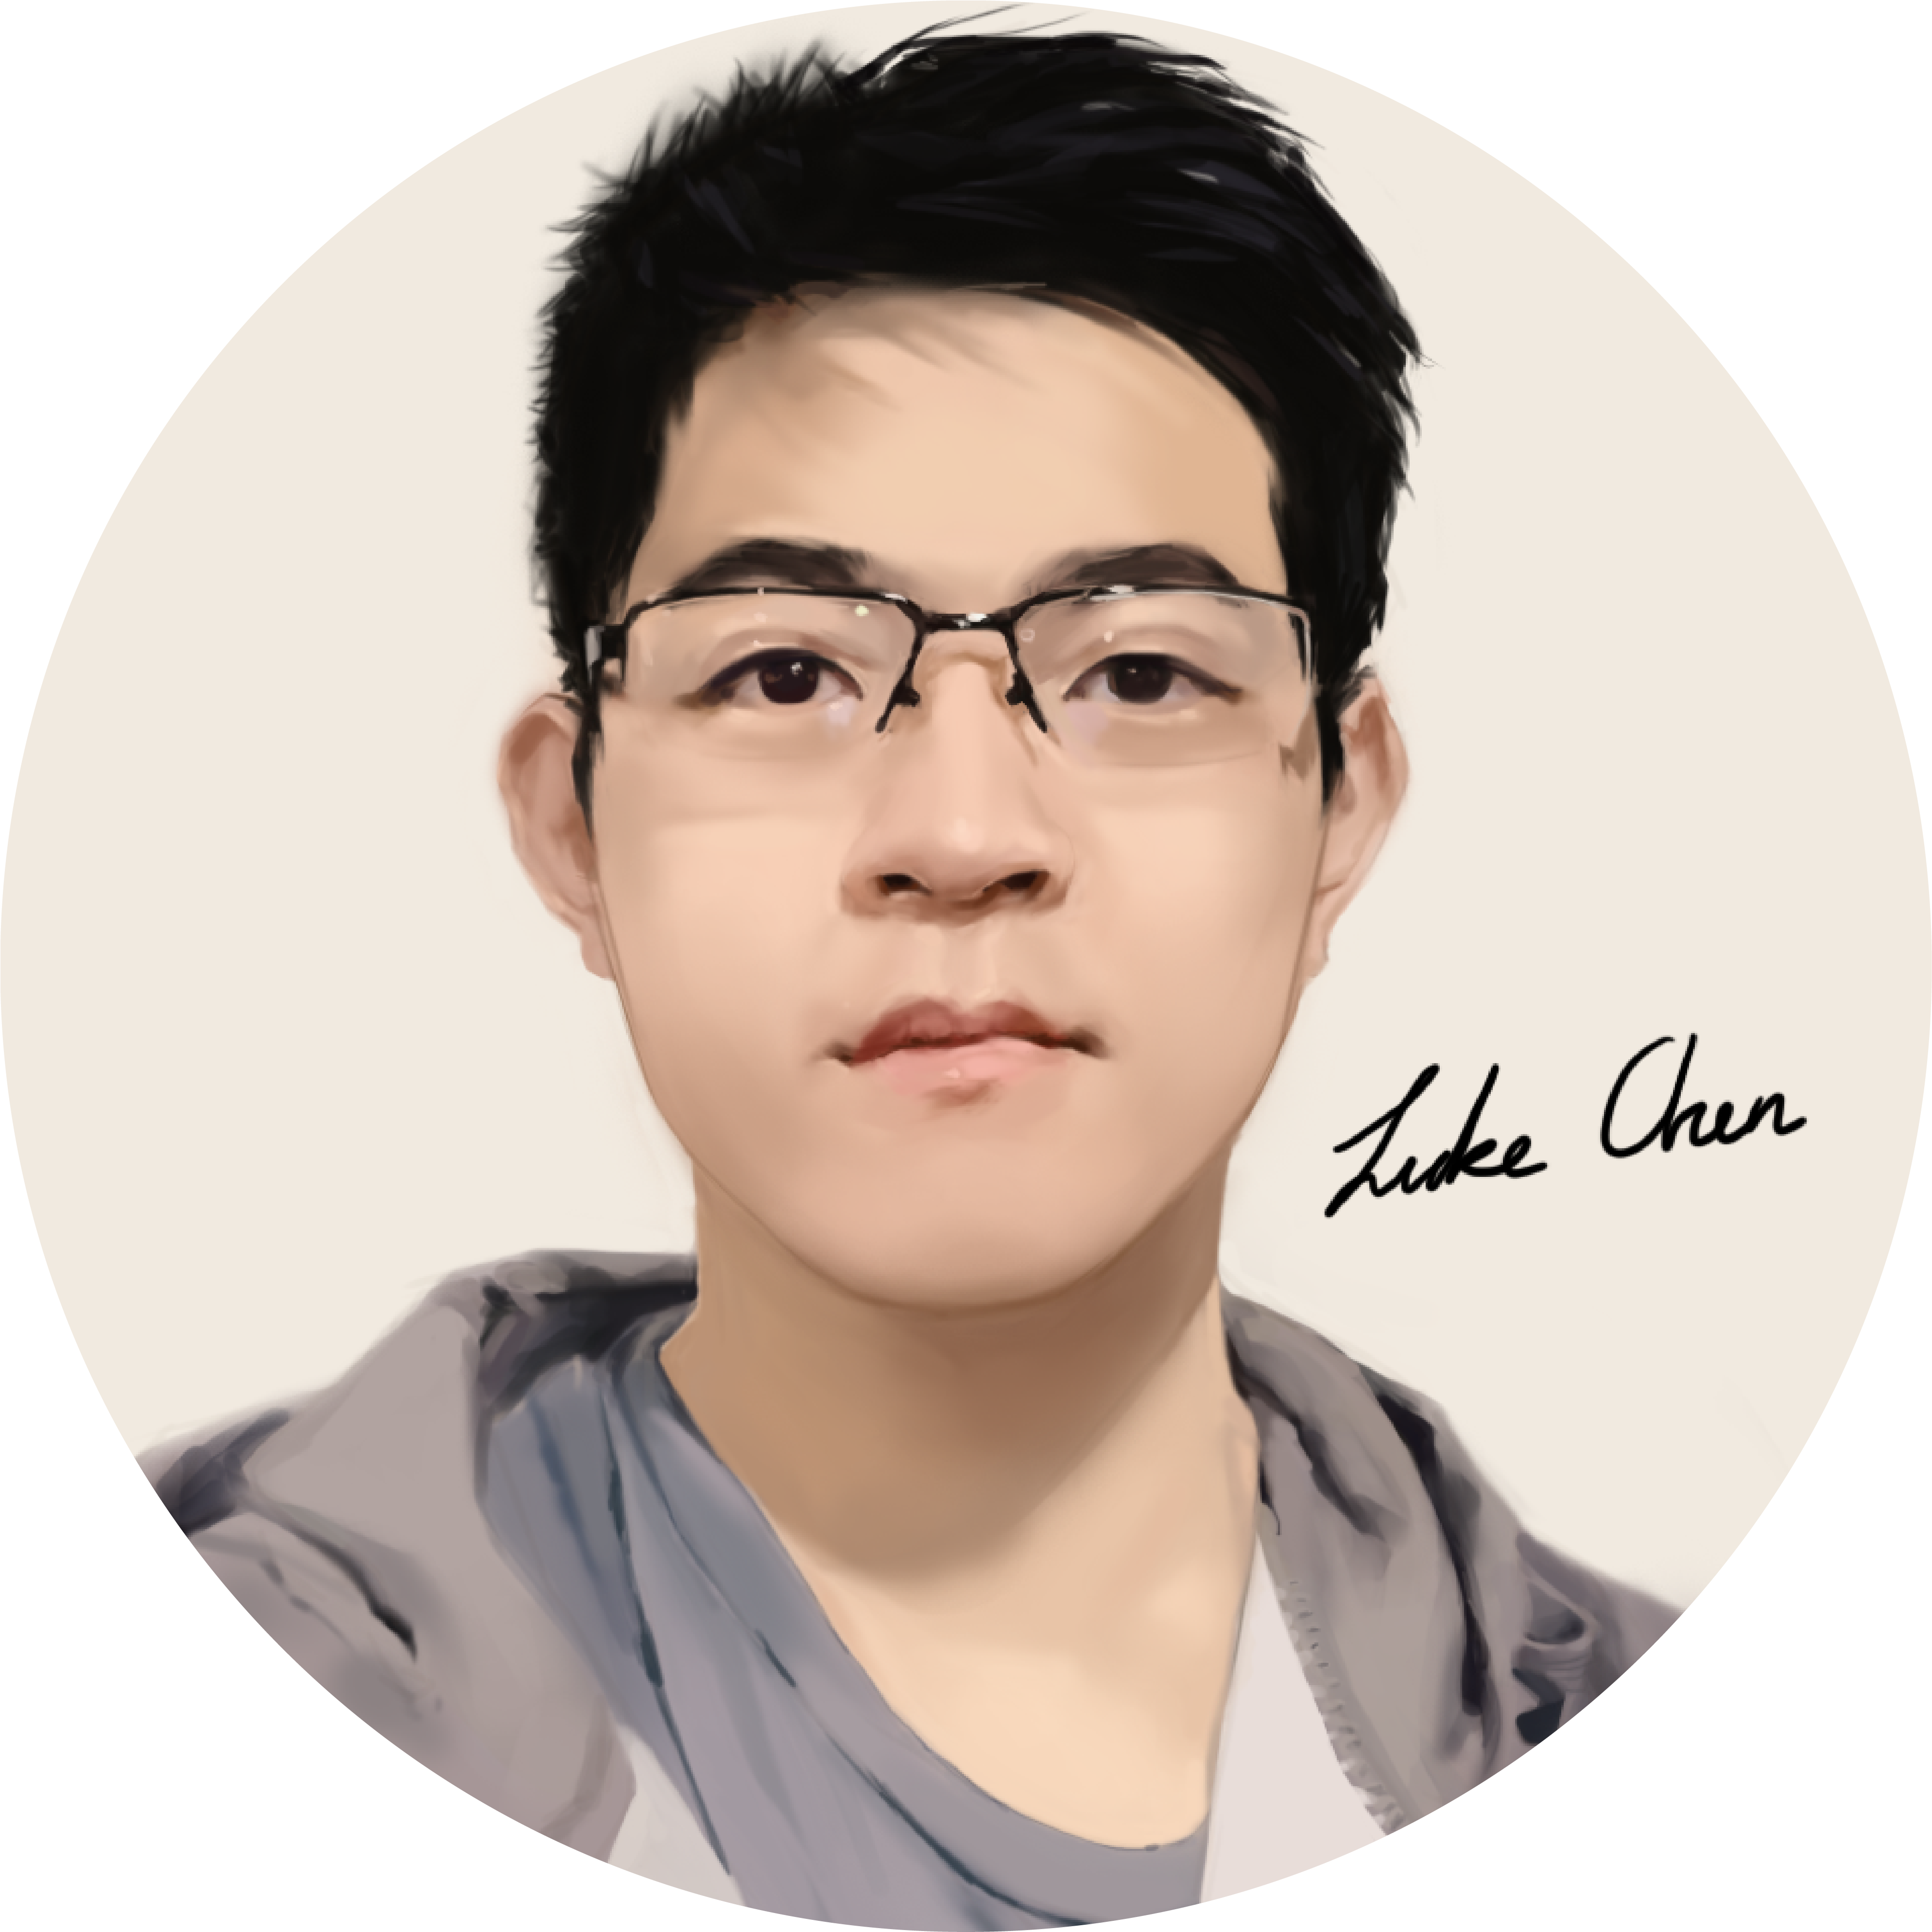 Luke Chen